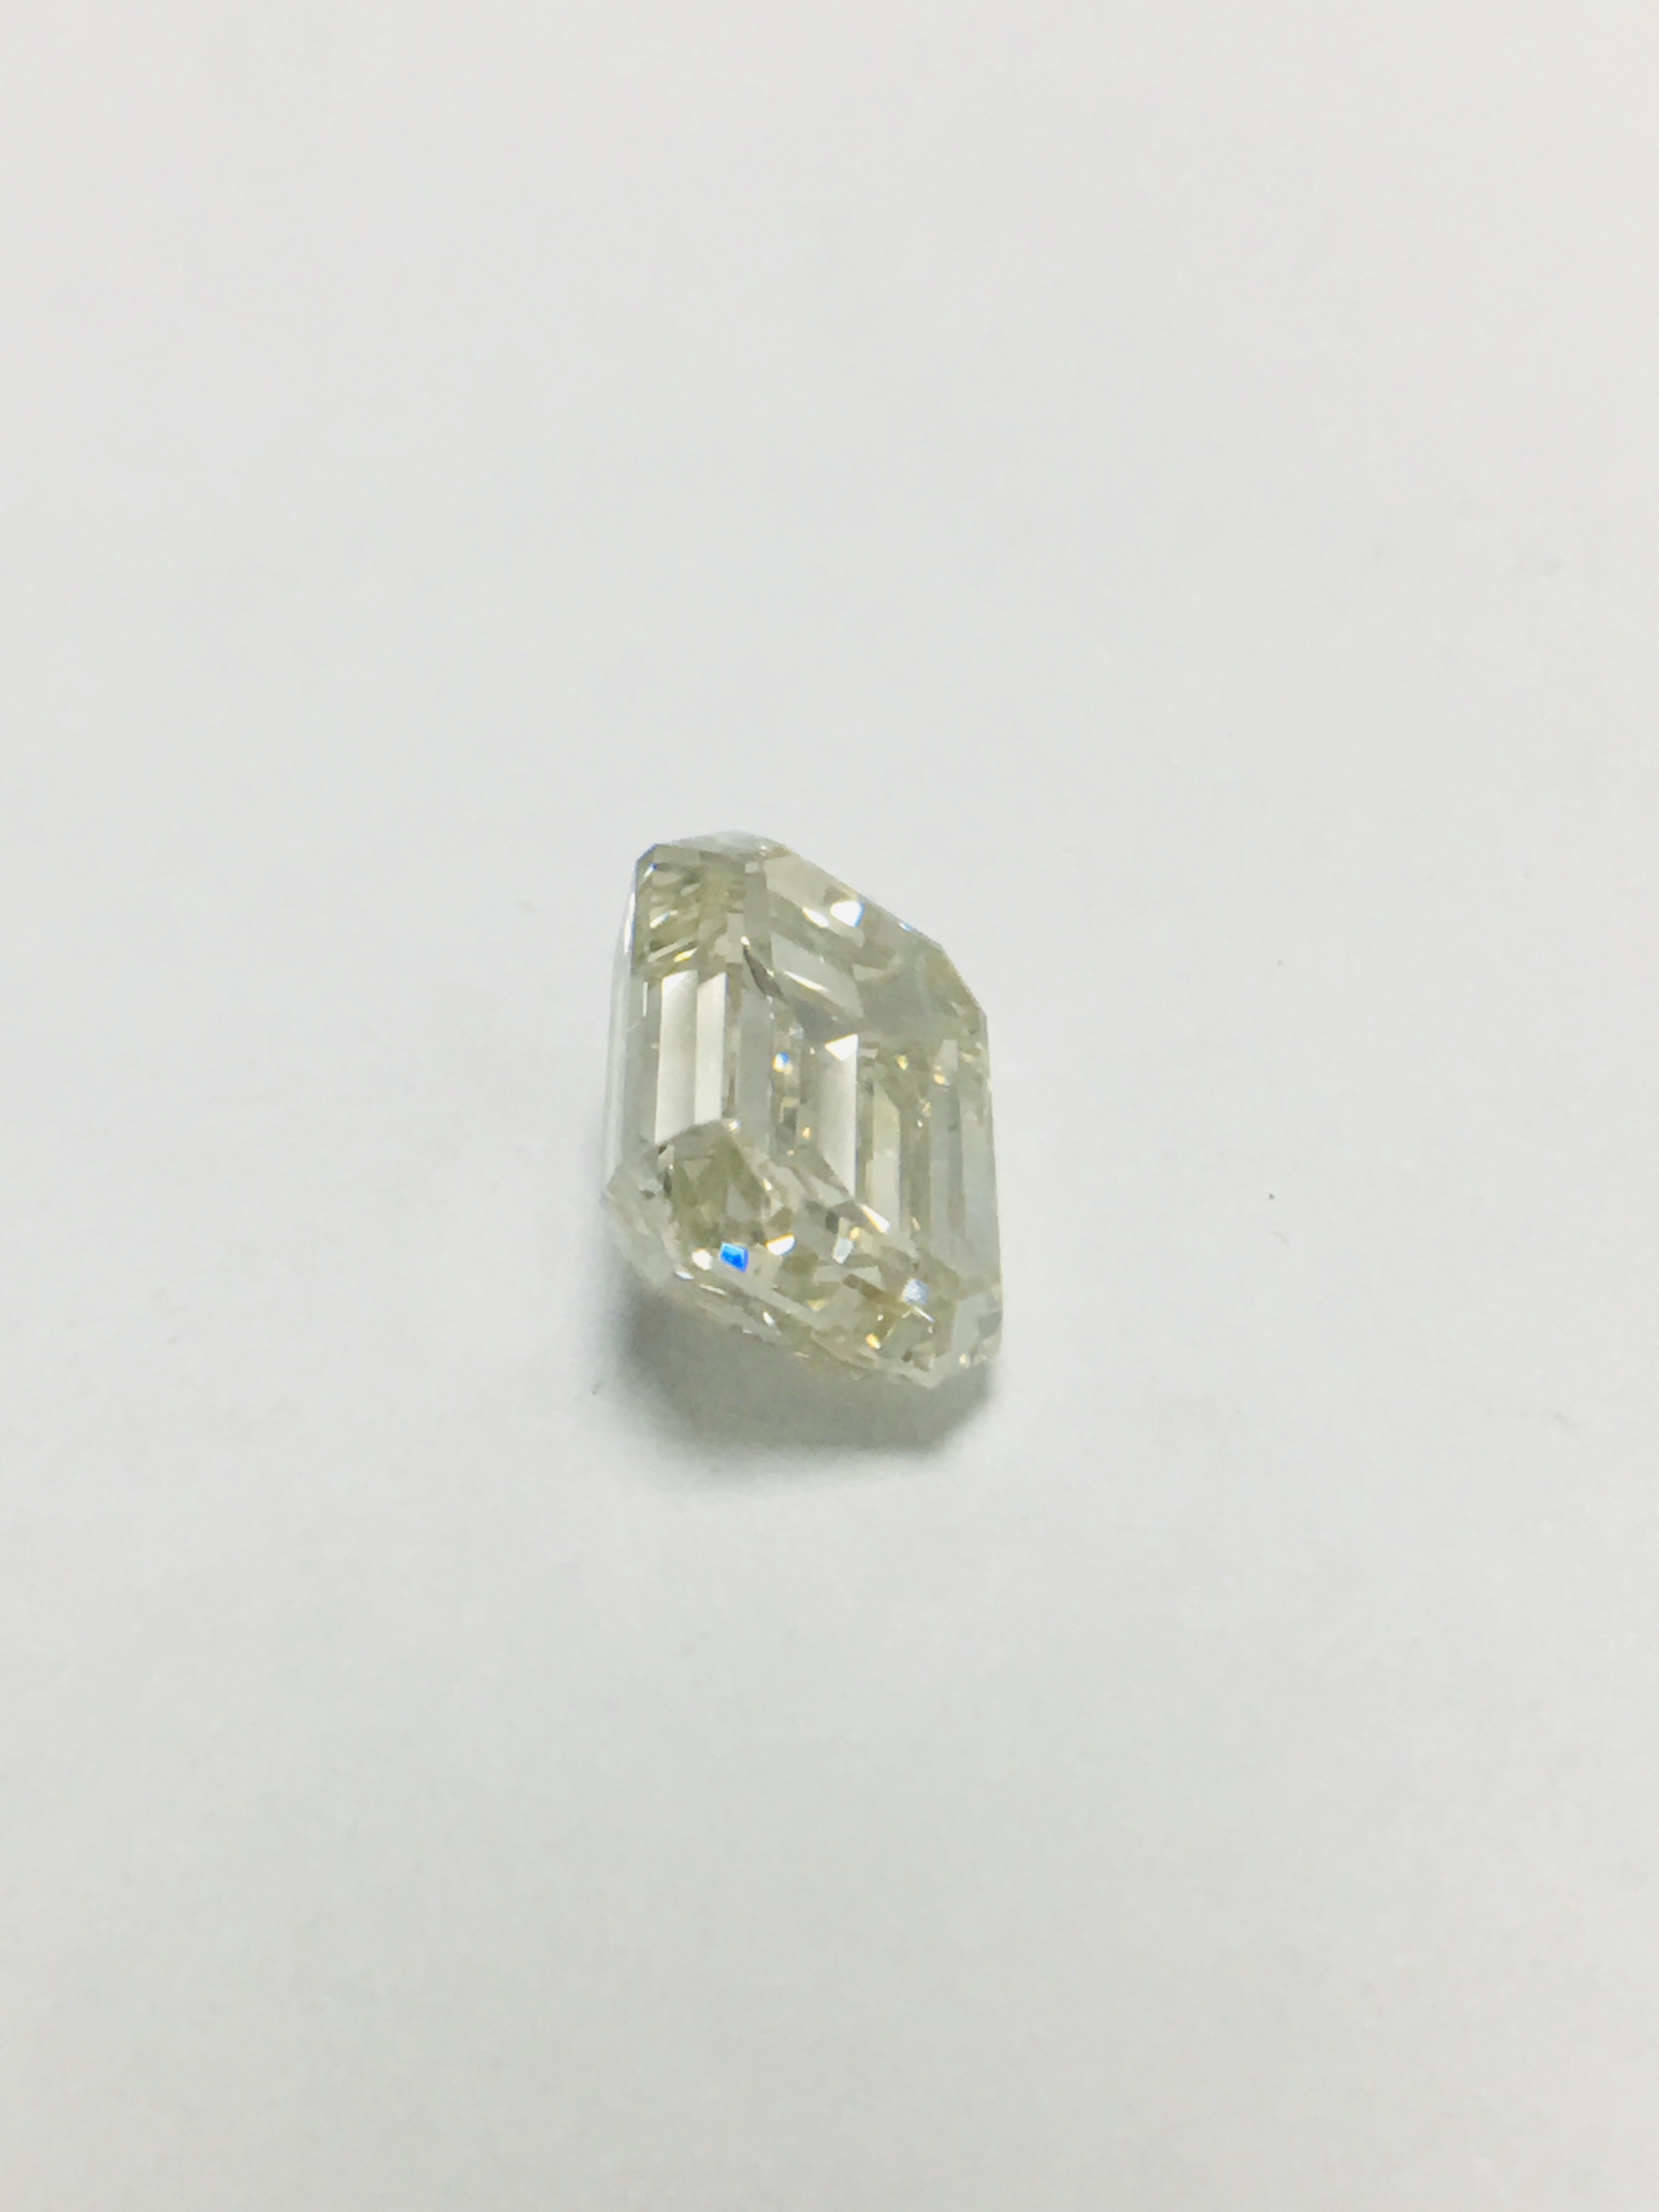 3.86ct Emerald Cut Diamond,Vs2 clarity,K colour,EGL CertificationEGL1516734222 - Image 4 of 5